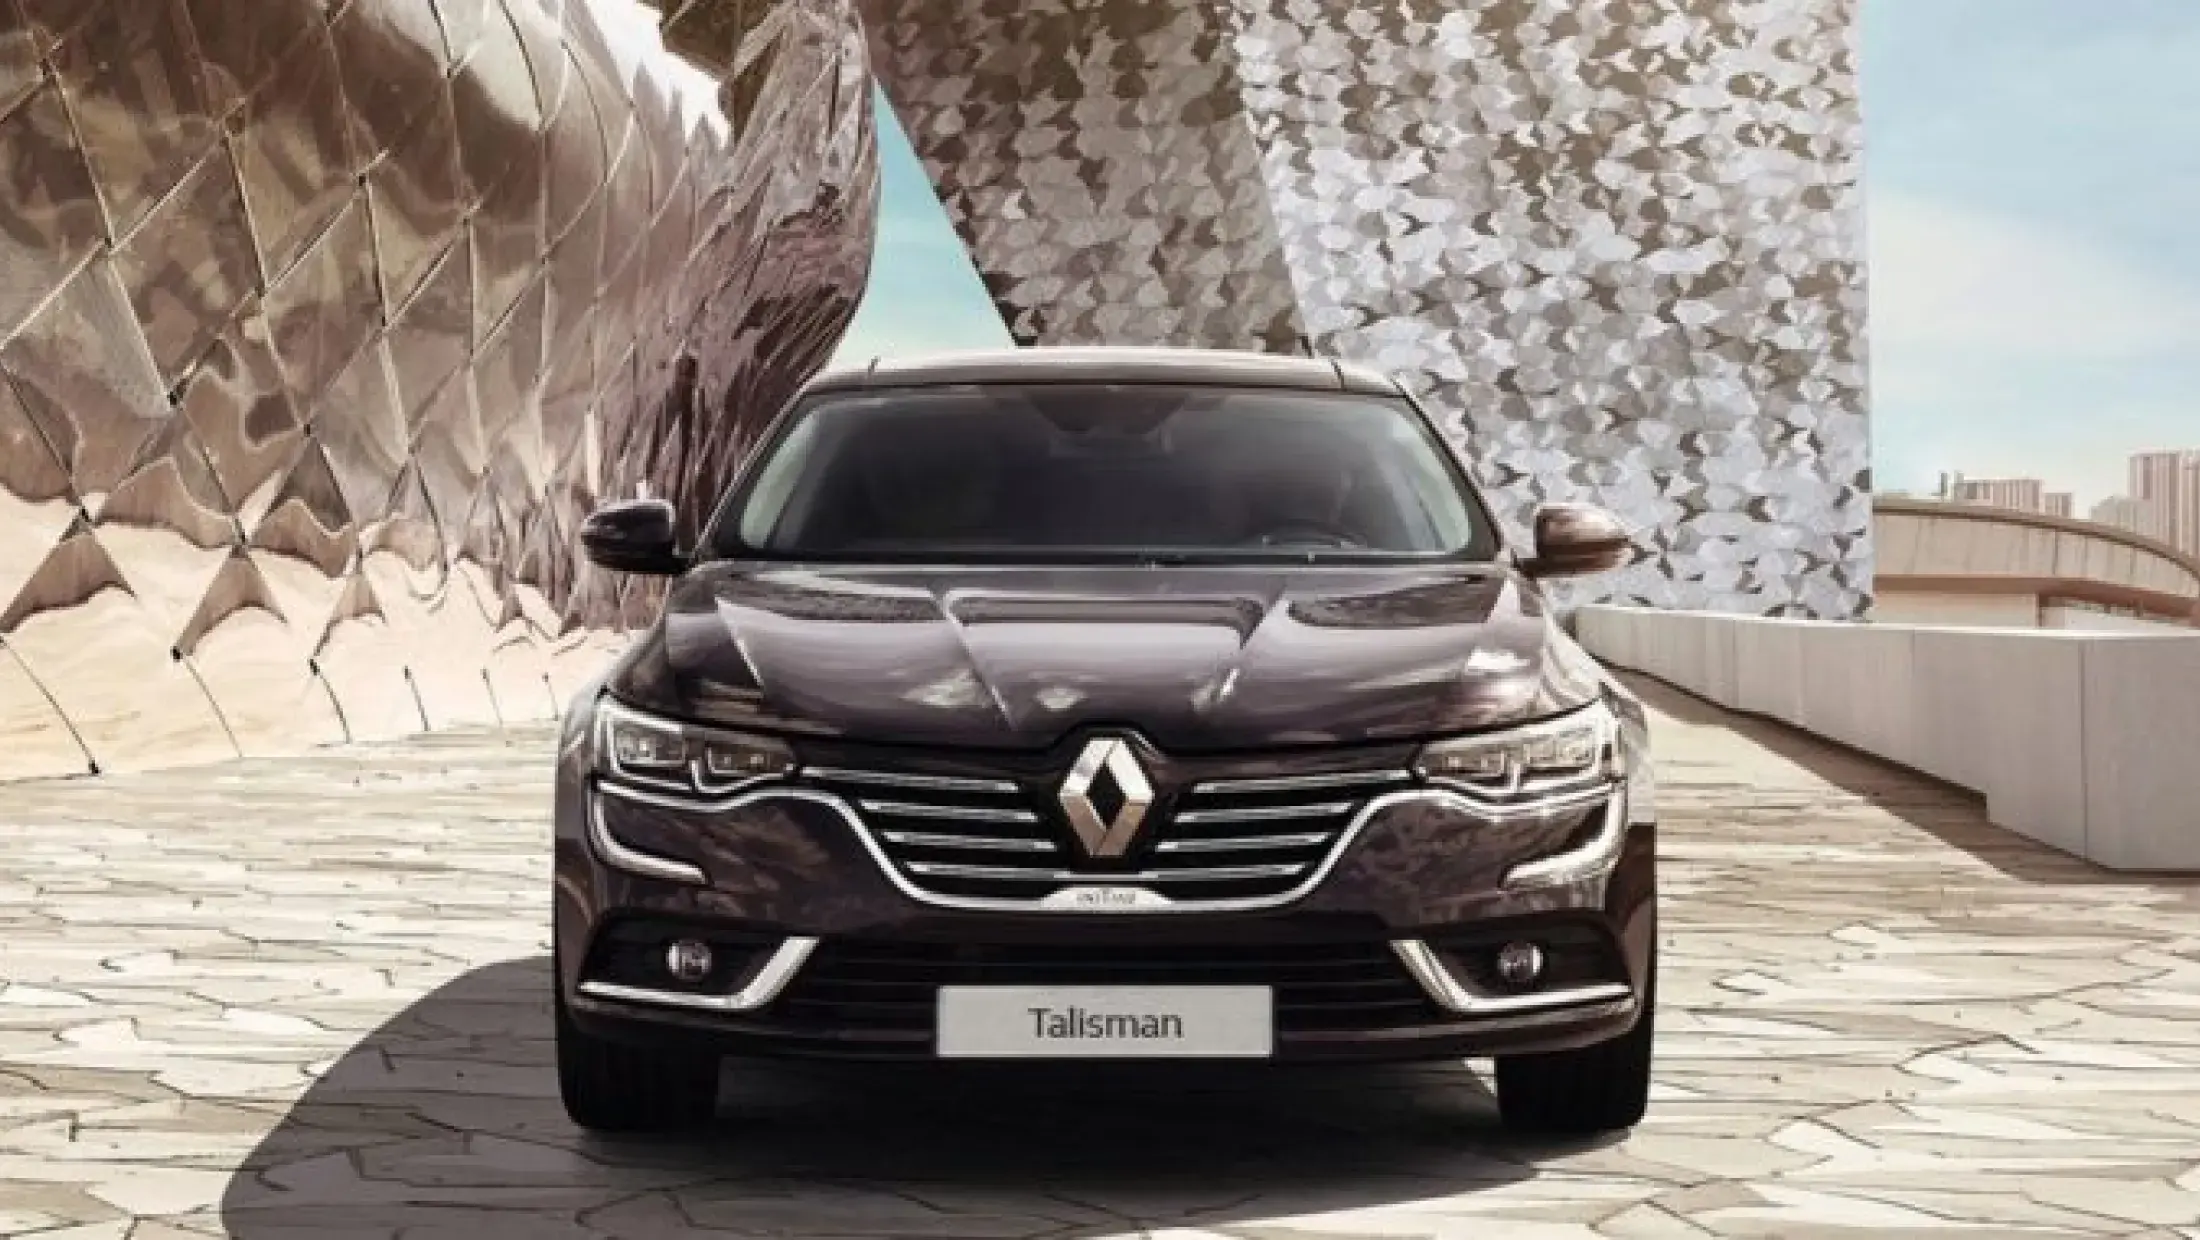 Renault Talisman front